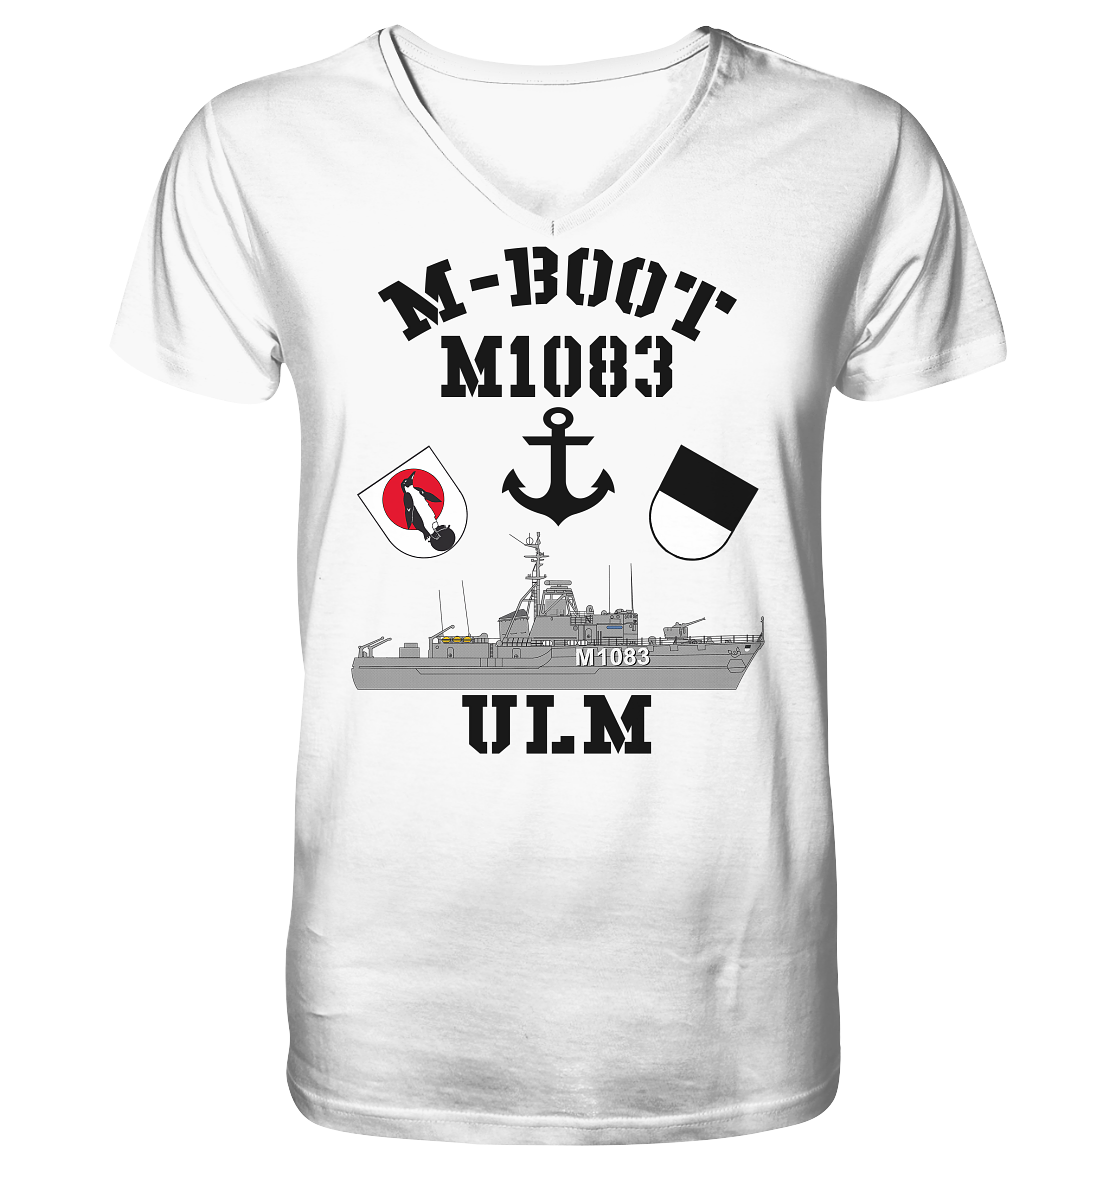 M-Boot M1083 ULM Anker - Mens Organic V-Neck Shirt